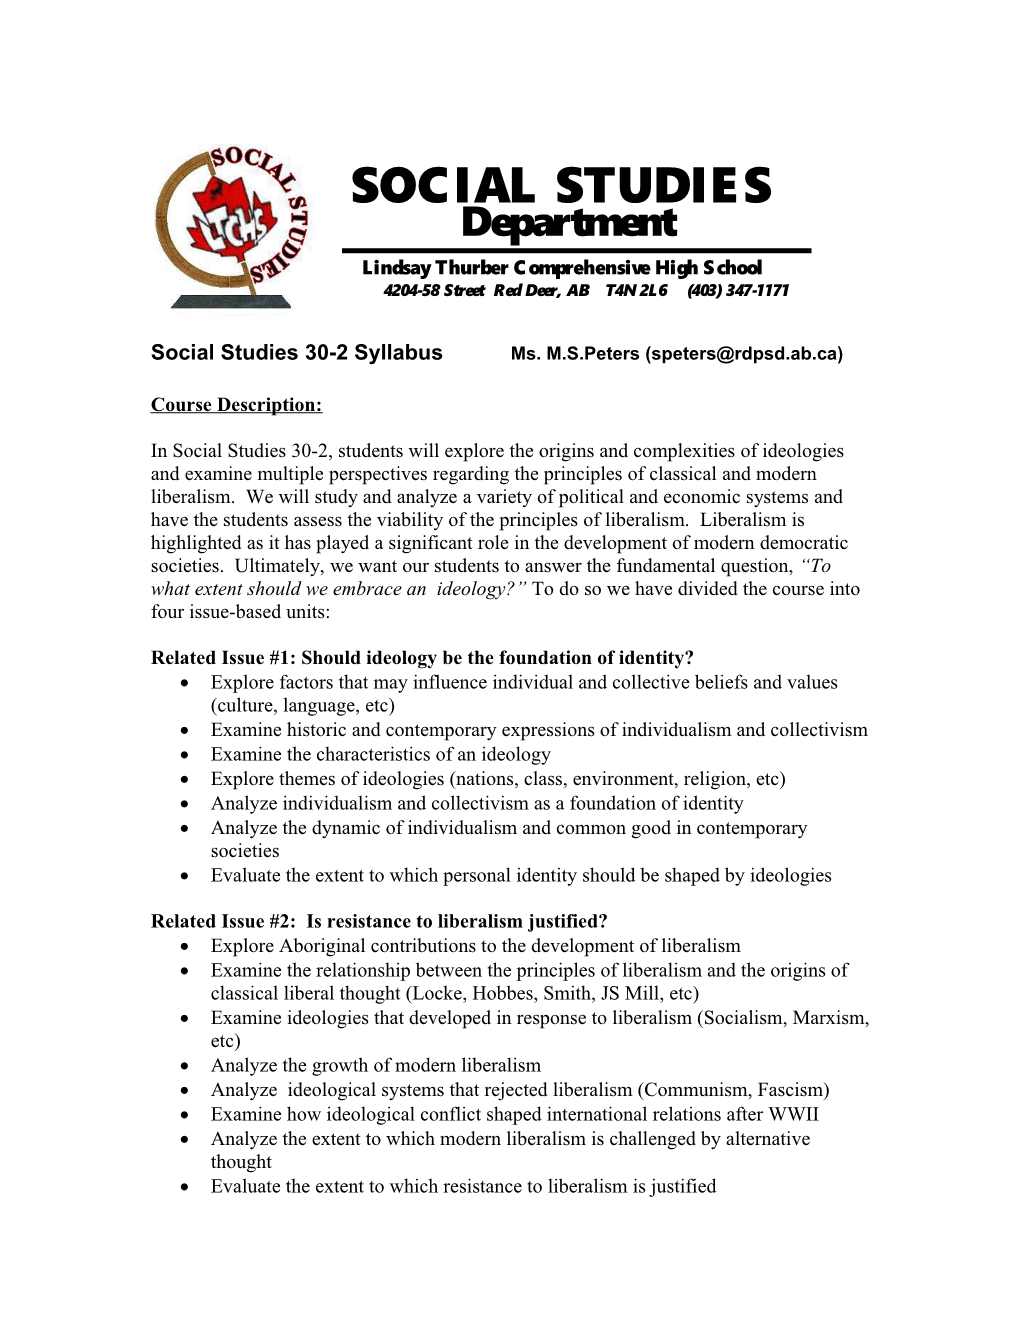 Social 30 Draft Course Outline